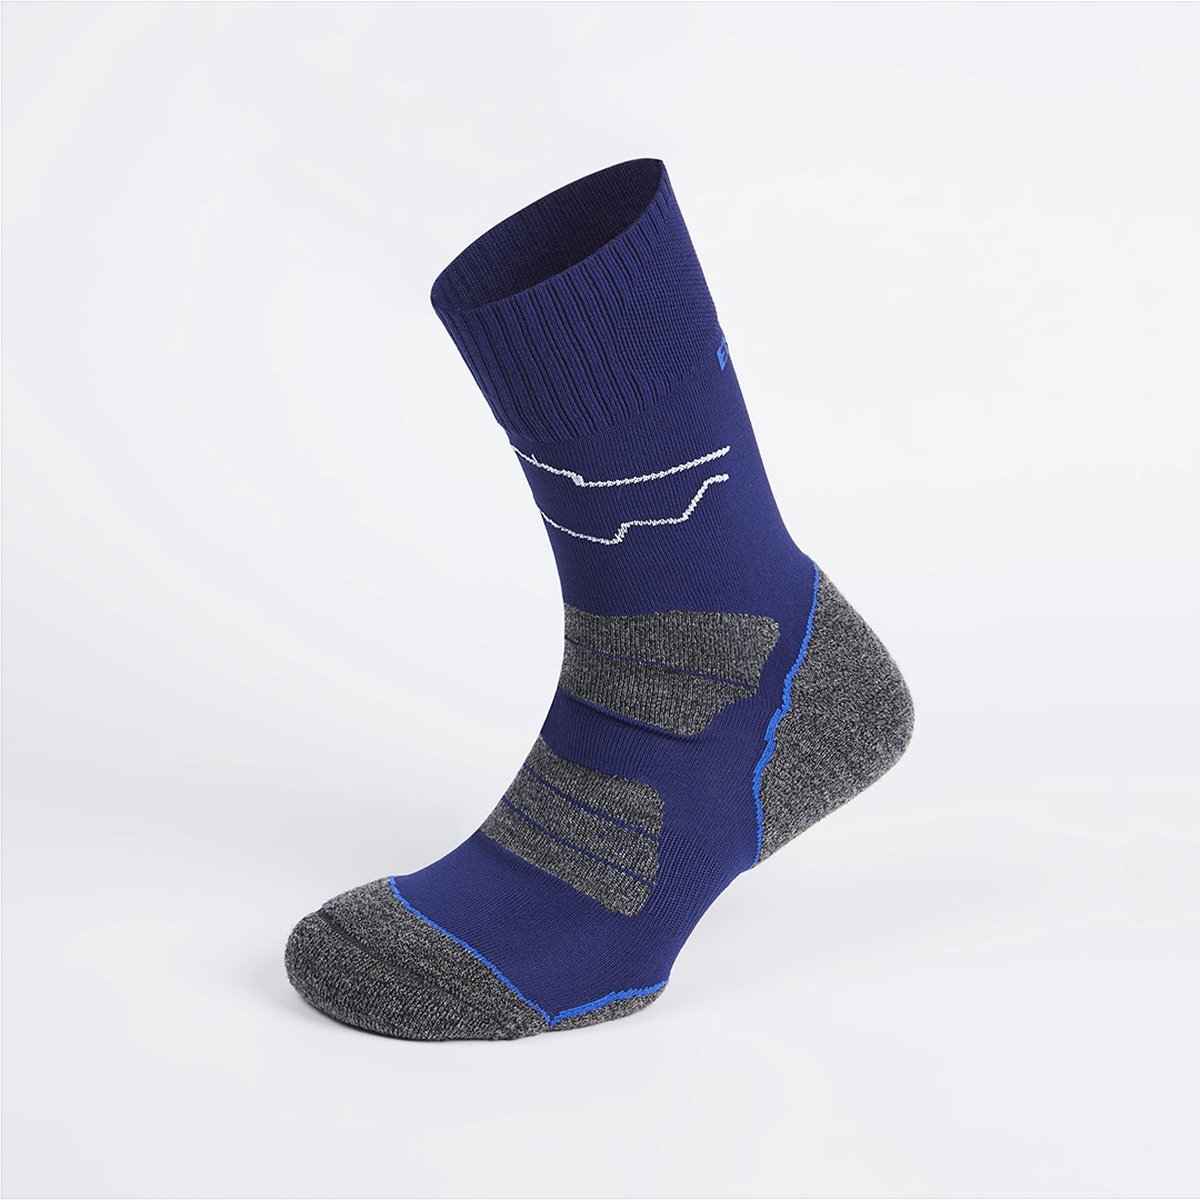 Enforma - Kilimanjaro - Trekking/wandel sokken – blauw - S (36-38)